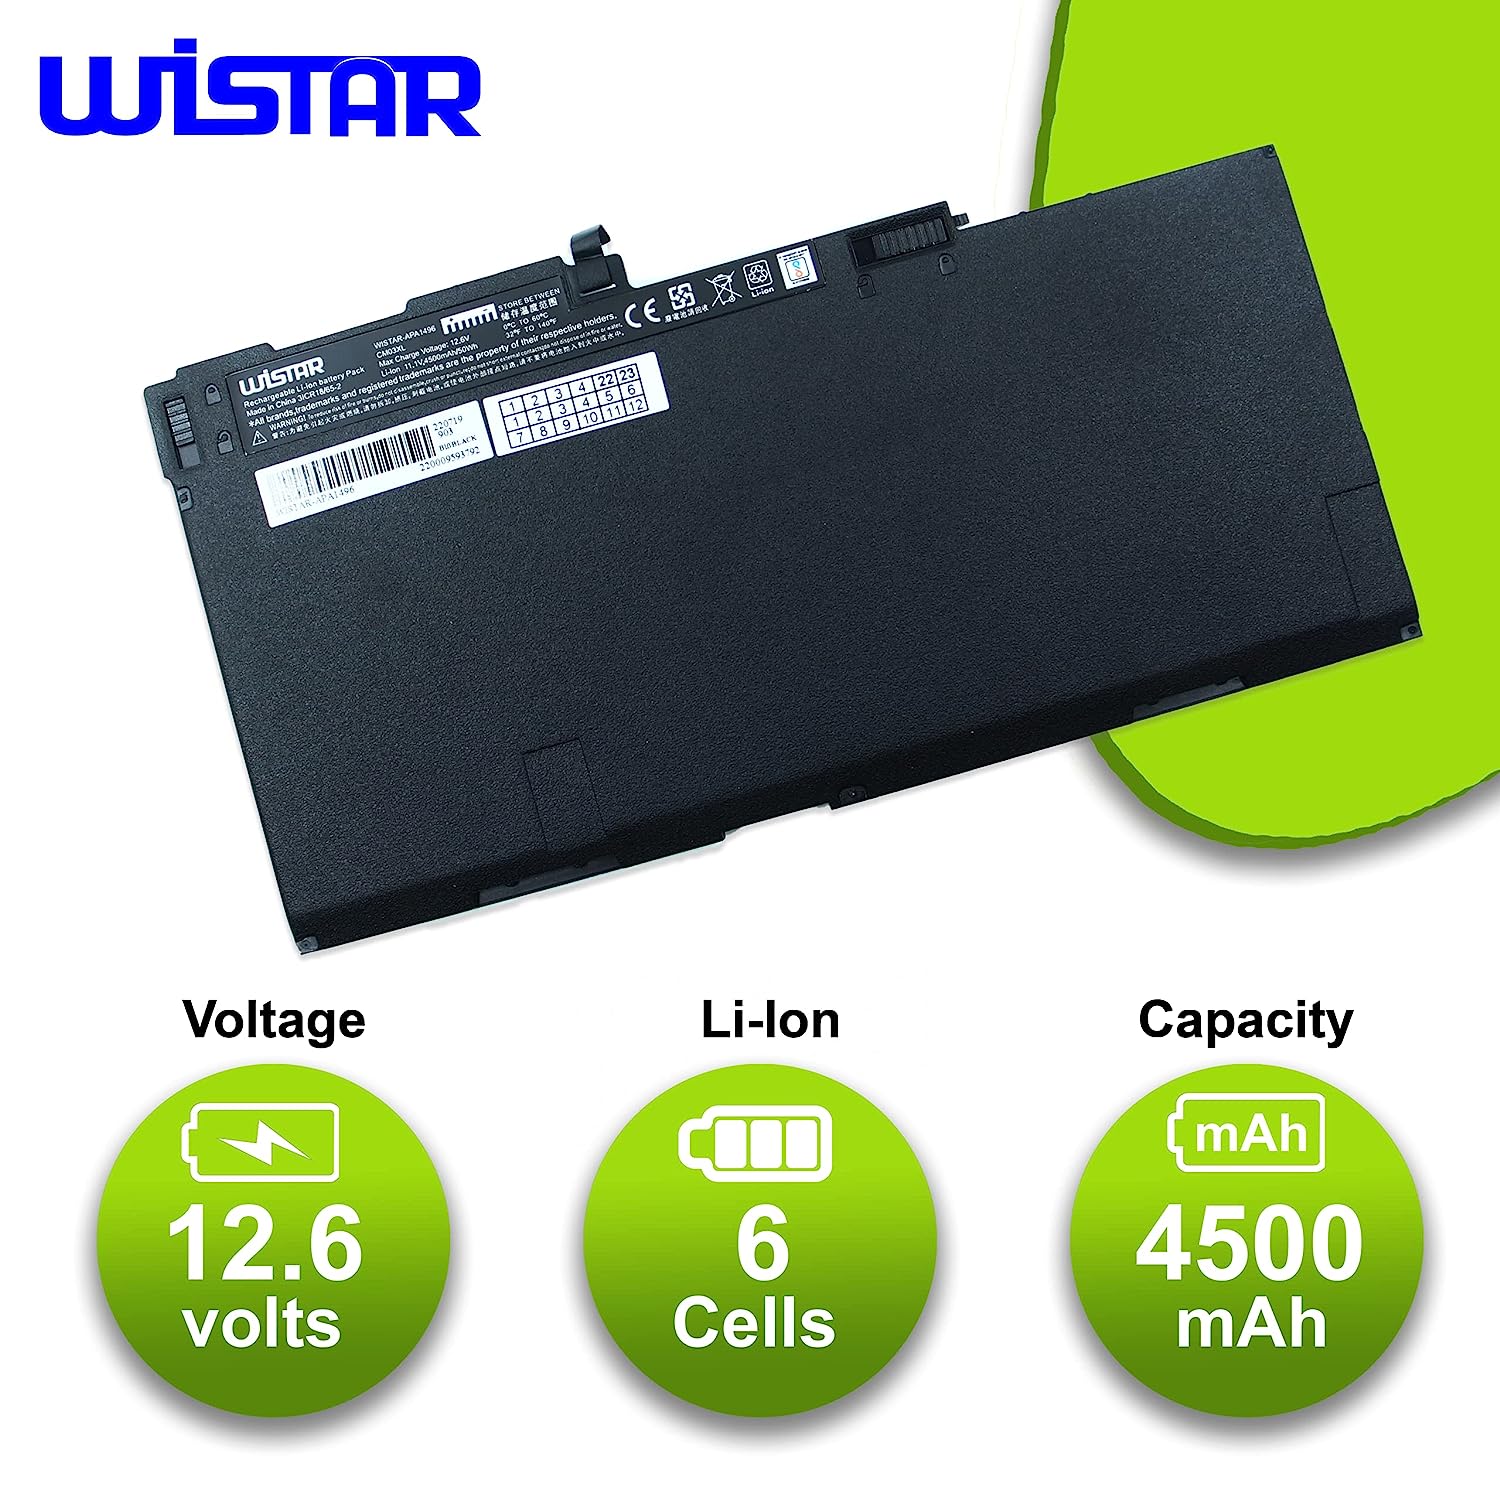 Laptop Battery Compatible for HP EliteBook 840 G1 845 G2 Notebook E7U24AA 716723-271. P/No. CM03, CM03XL, CO06, CO06XL Battery